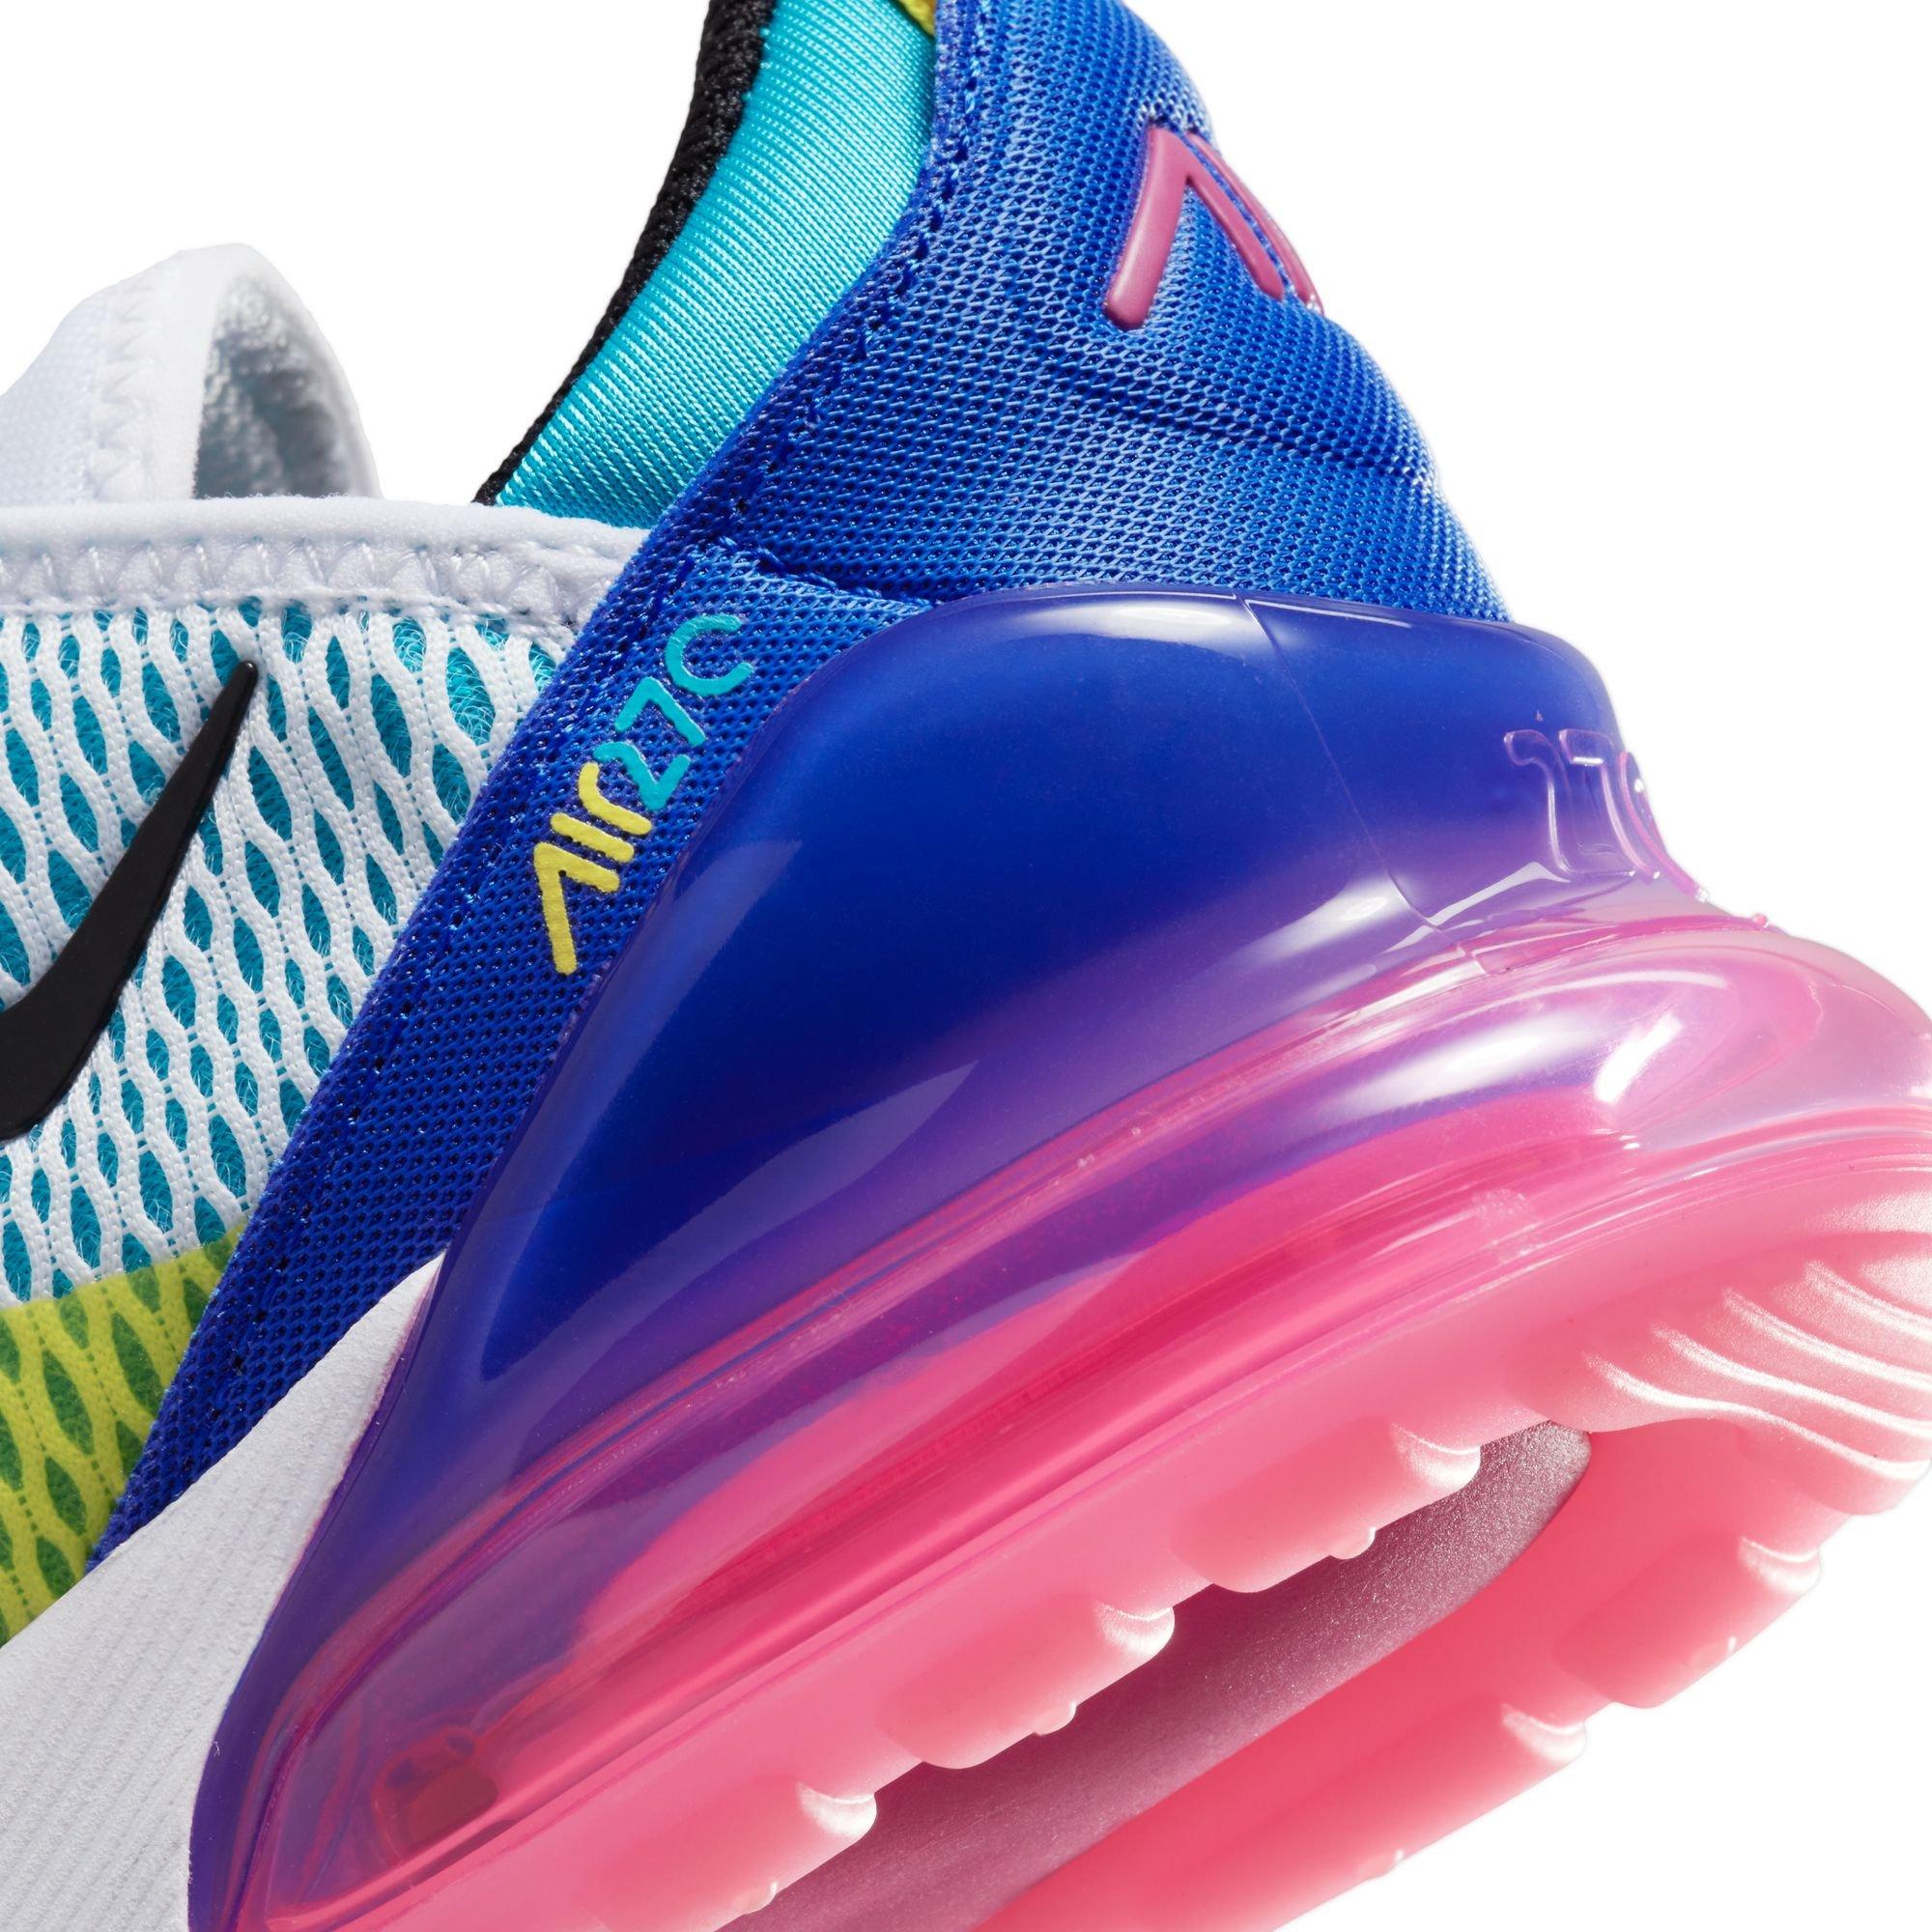 Embryo fundament eindeloos Nike Air Max 270 "White/Black/Hyper Royal/Pink Spell" Preschool Girls' Shoe